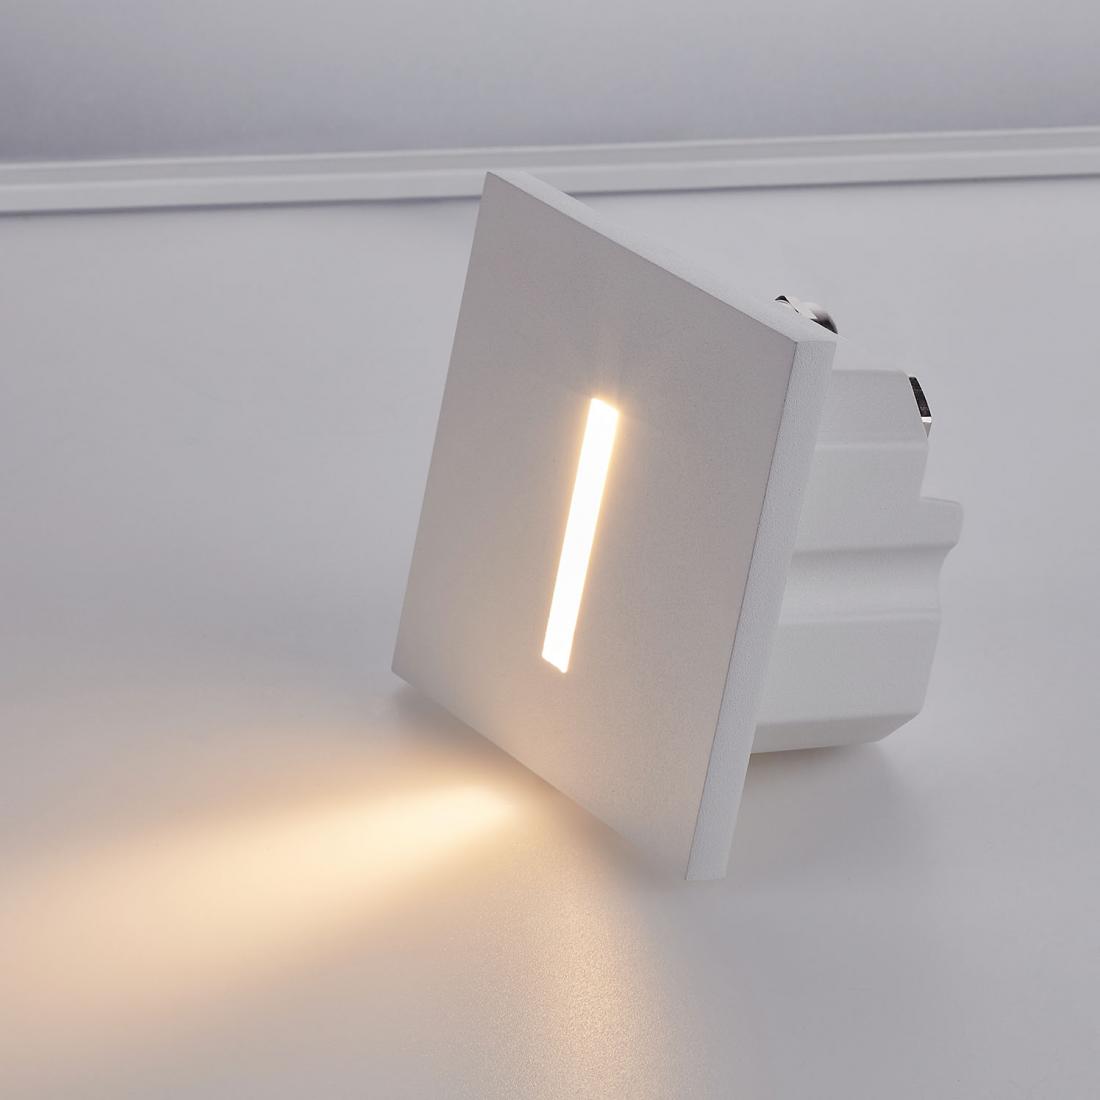  led wall light